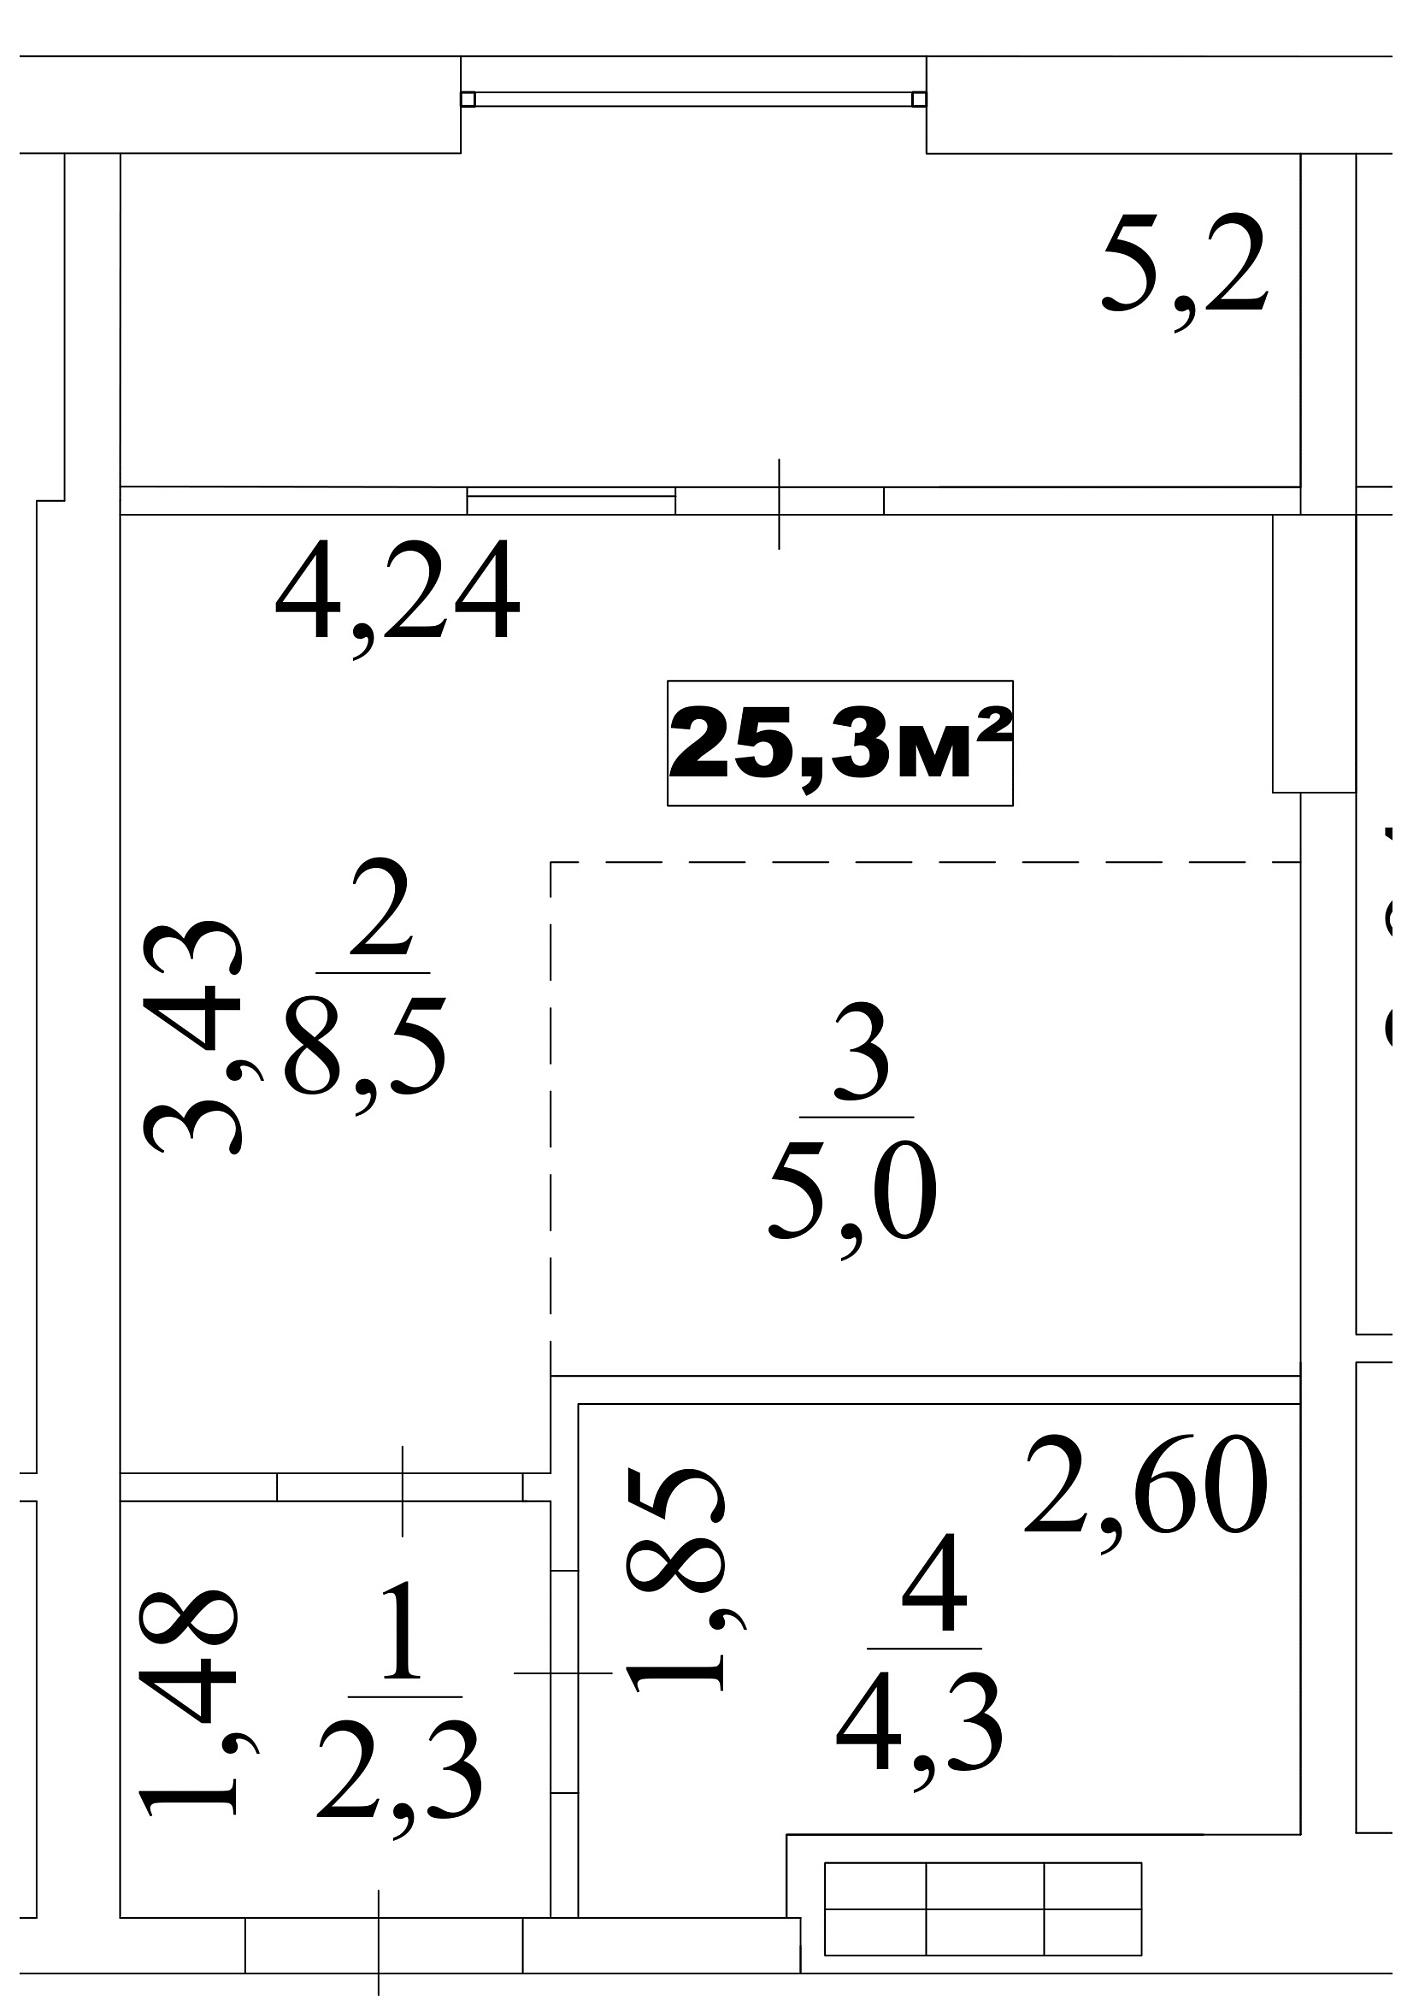 Планировка Smart-квартира площей 25.3м2, AB-10-01/0003в.